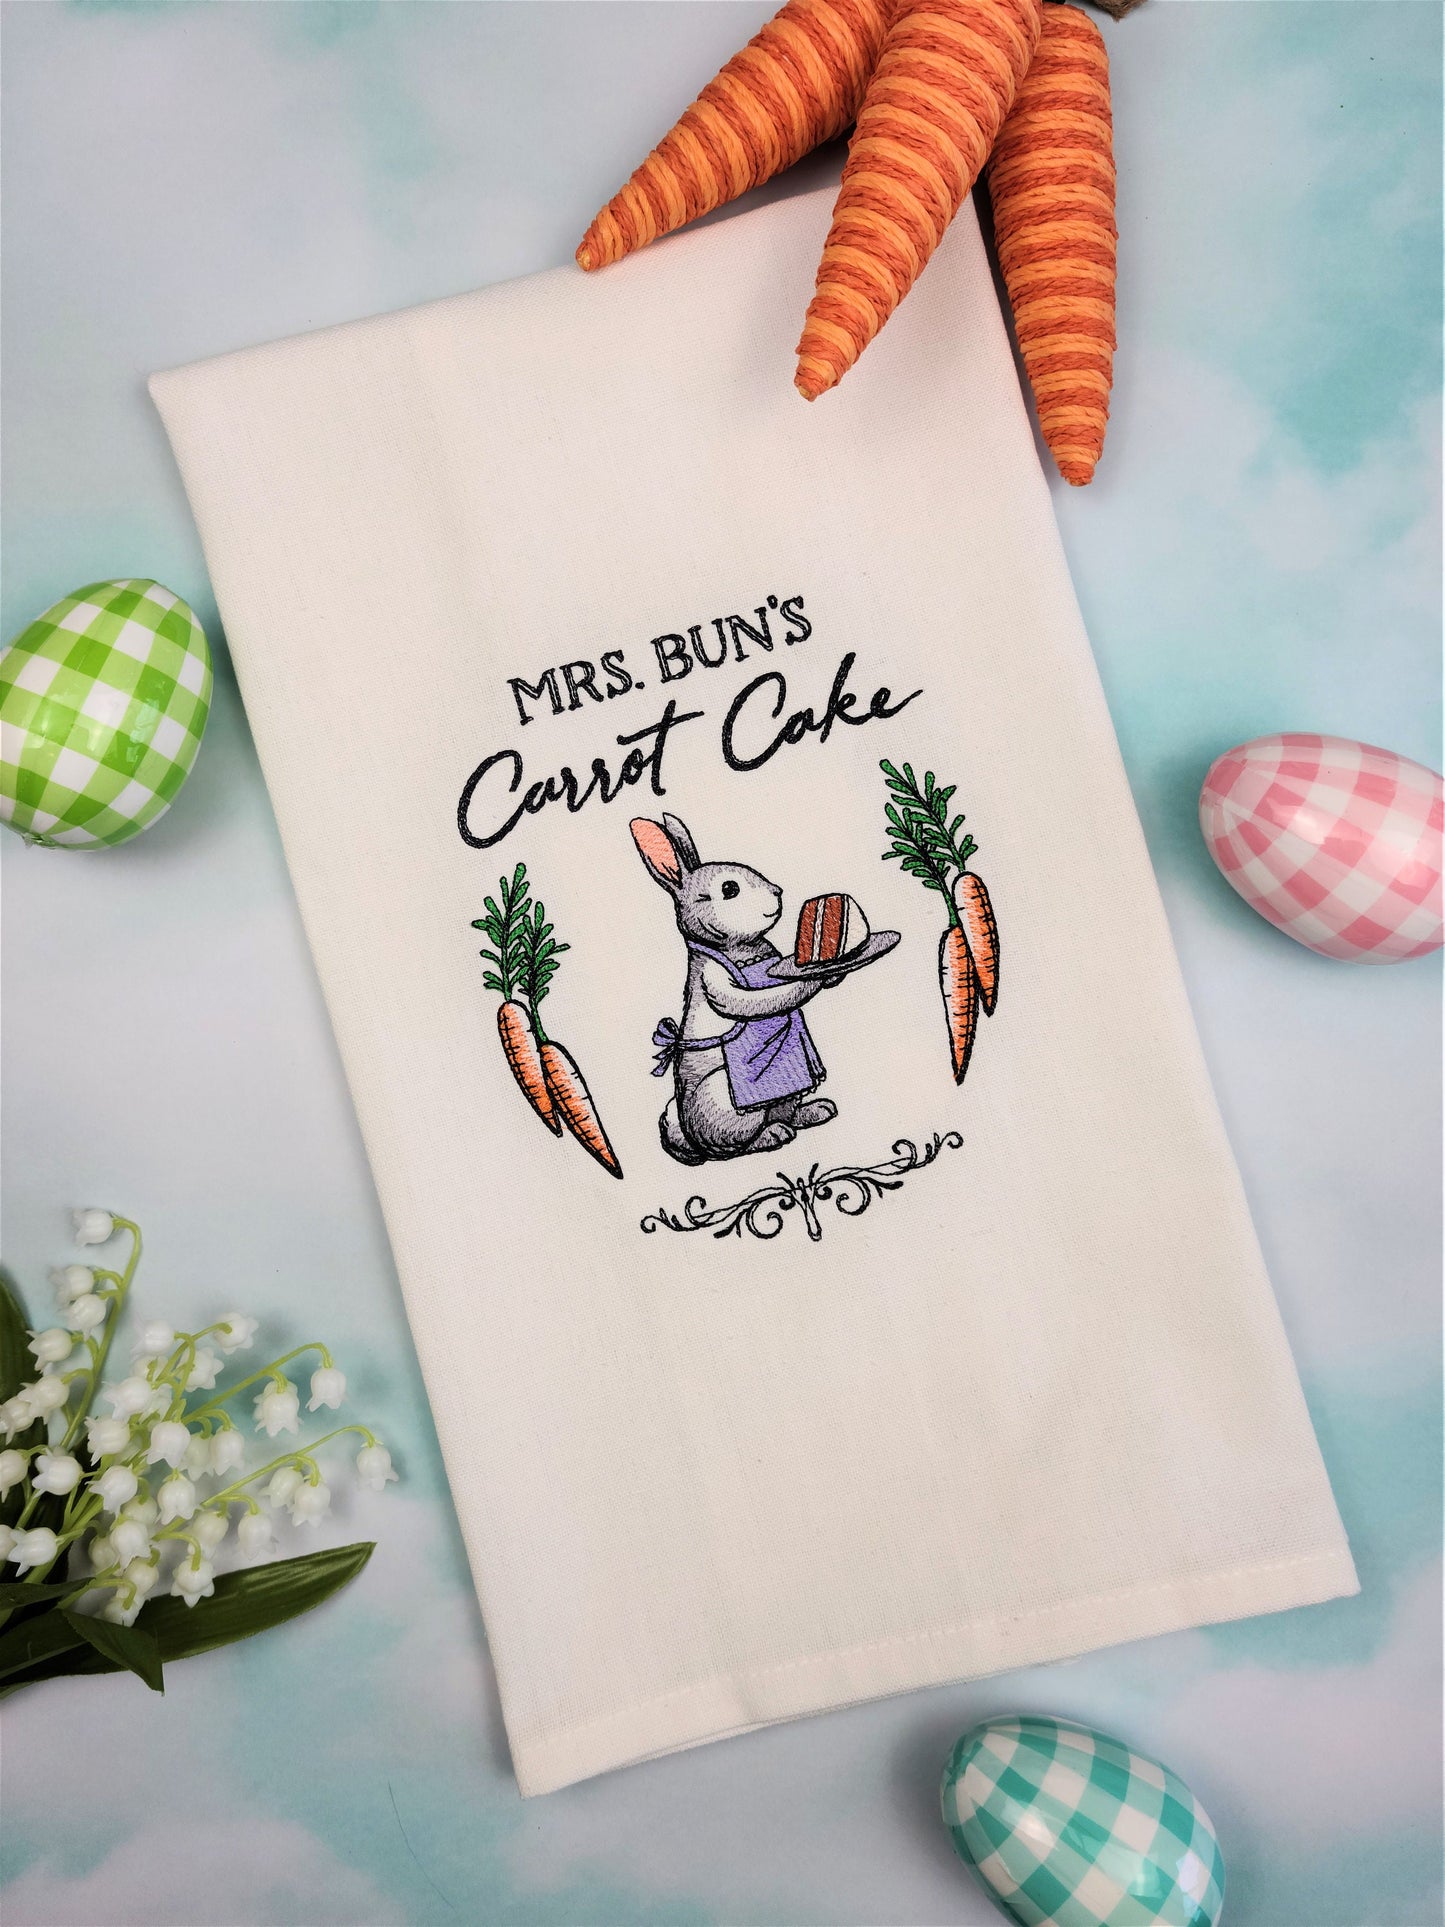 Mrs. Bun's Carrot Cake Embroidered Kitchen Tea Towel